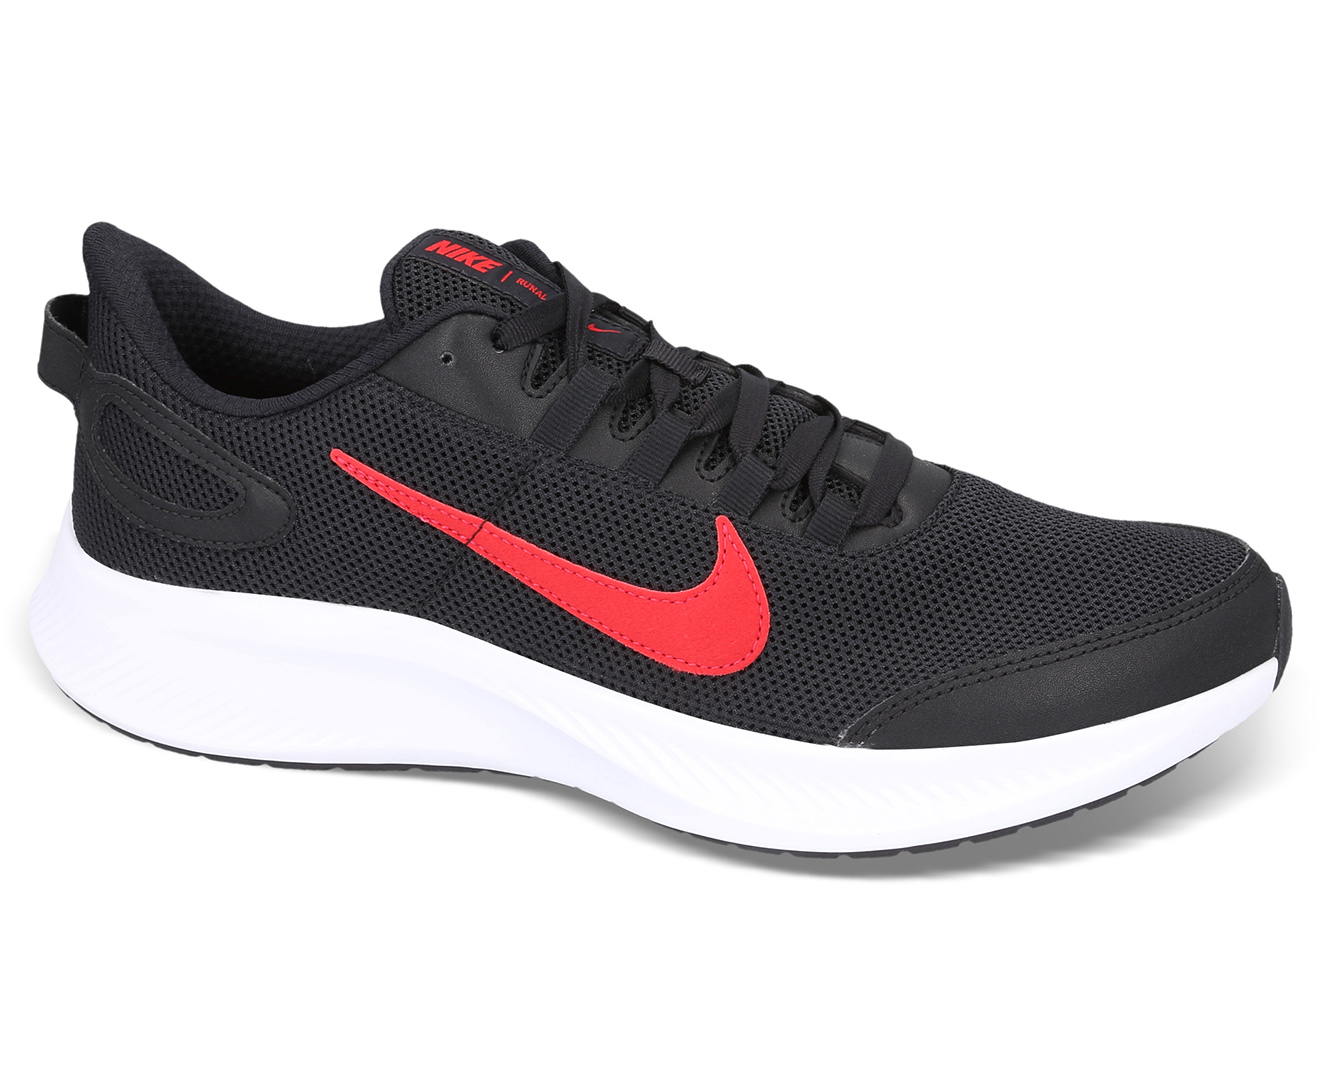 Nike Men's Runallday 2 Running Shoes - Black/University Red/White ...